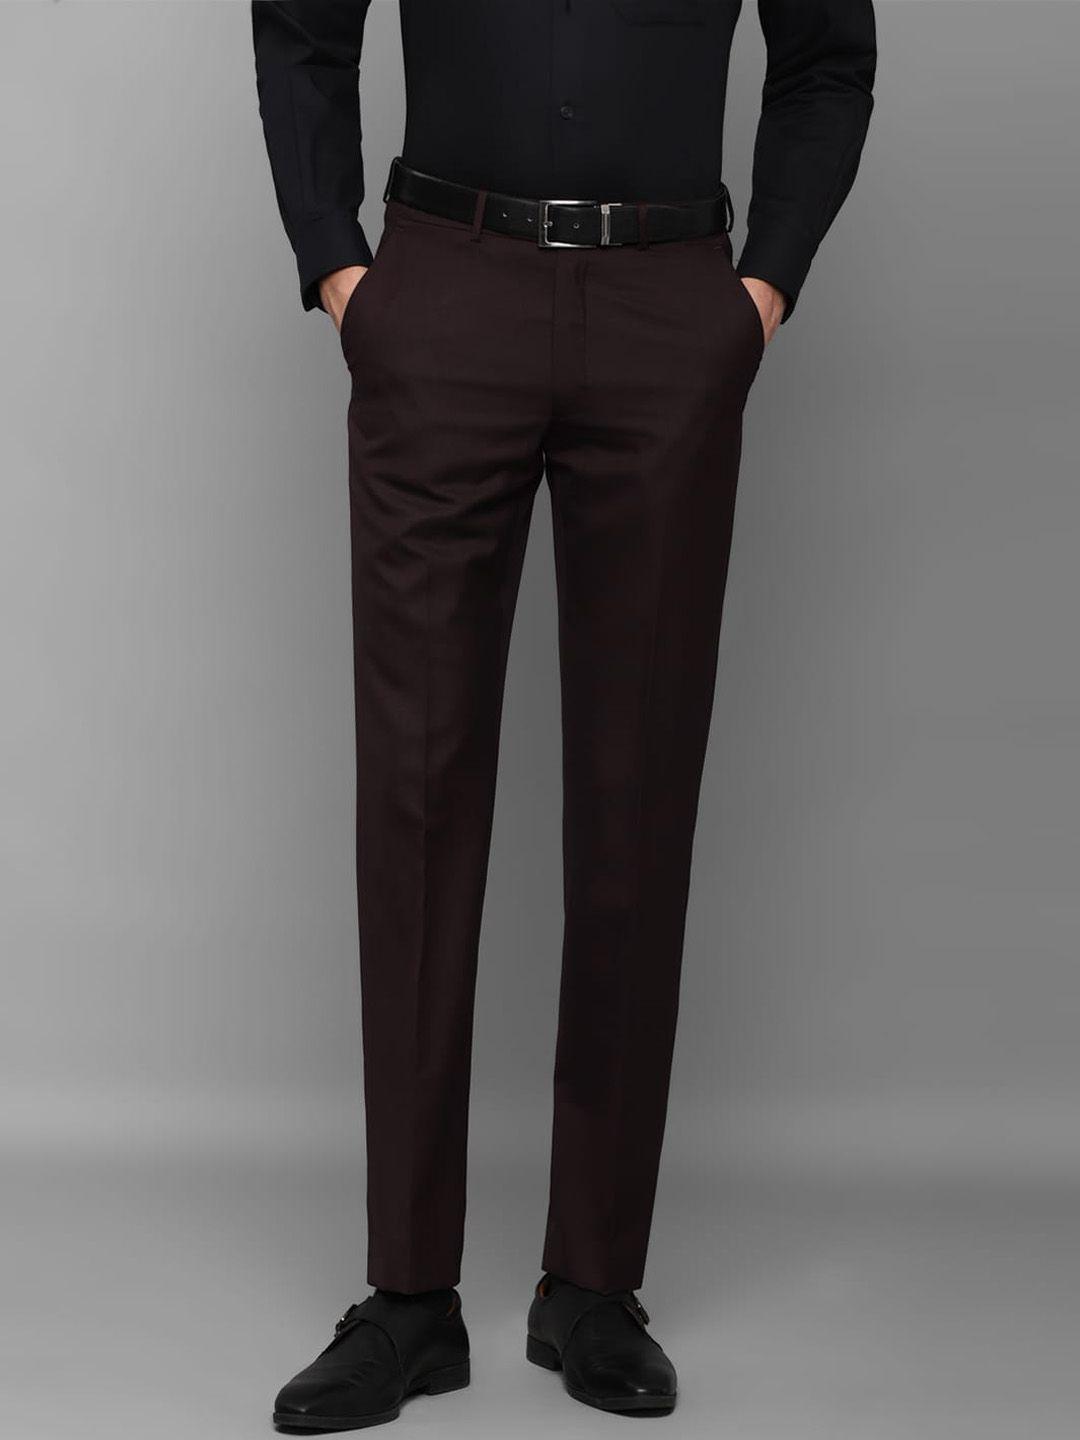 luxure by louis philippe men maroon slim fit formal trousers